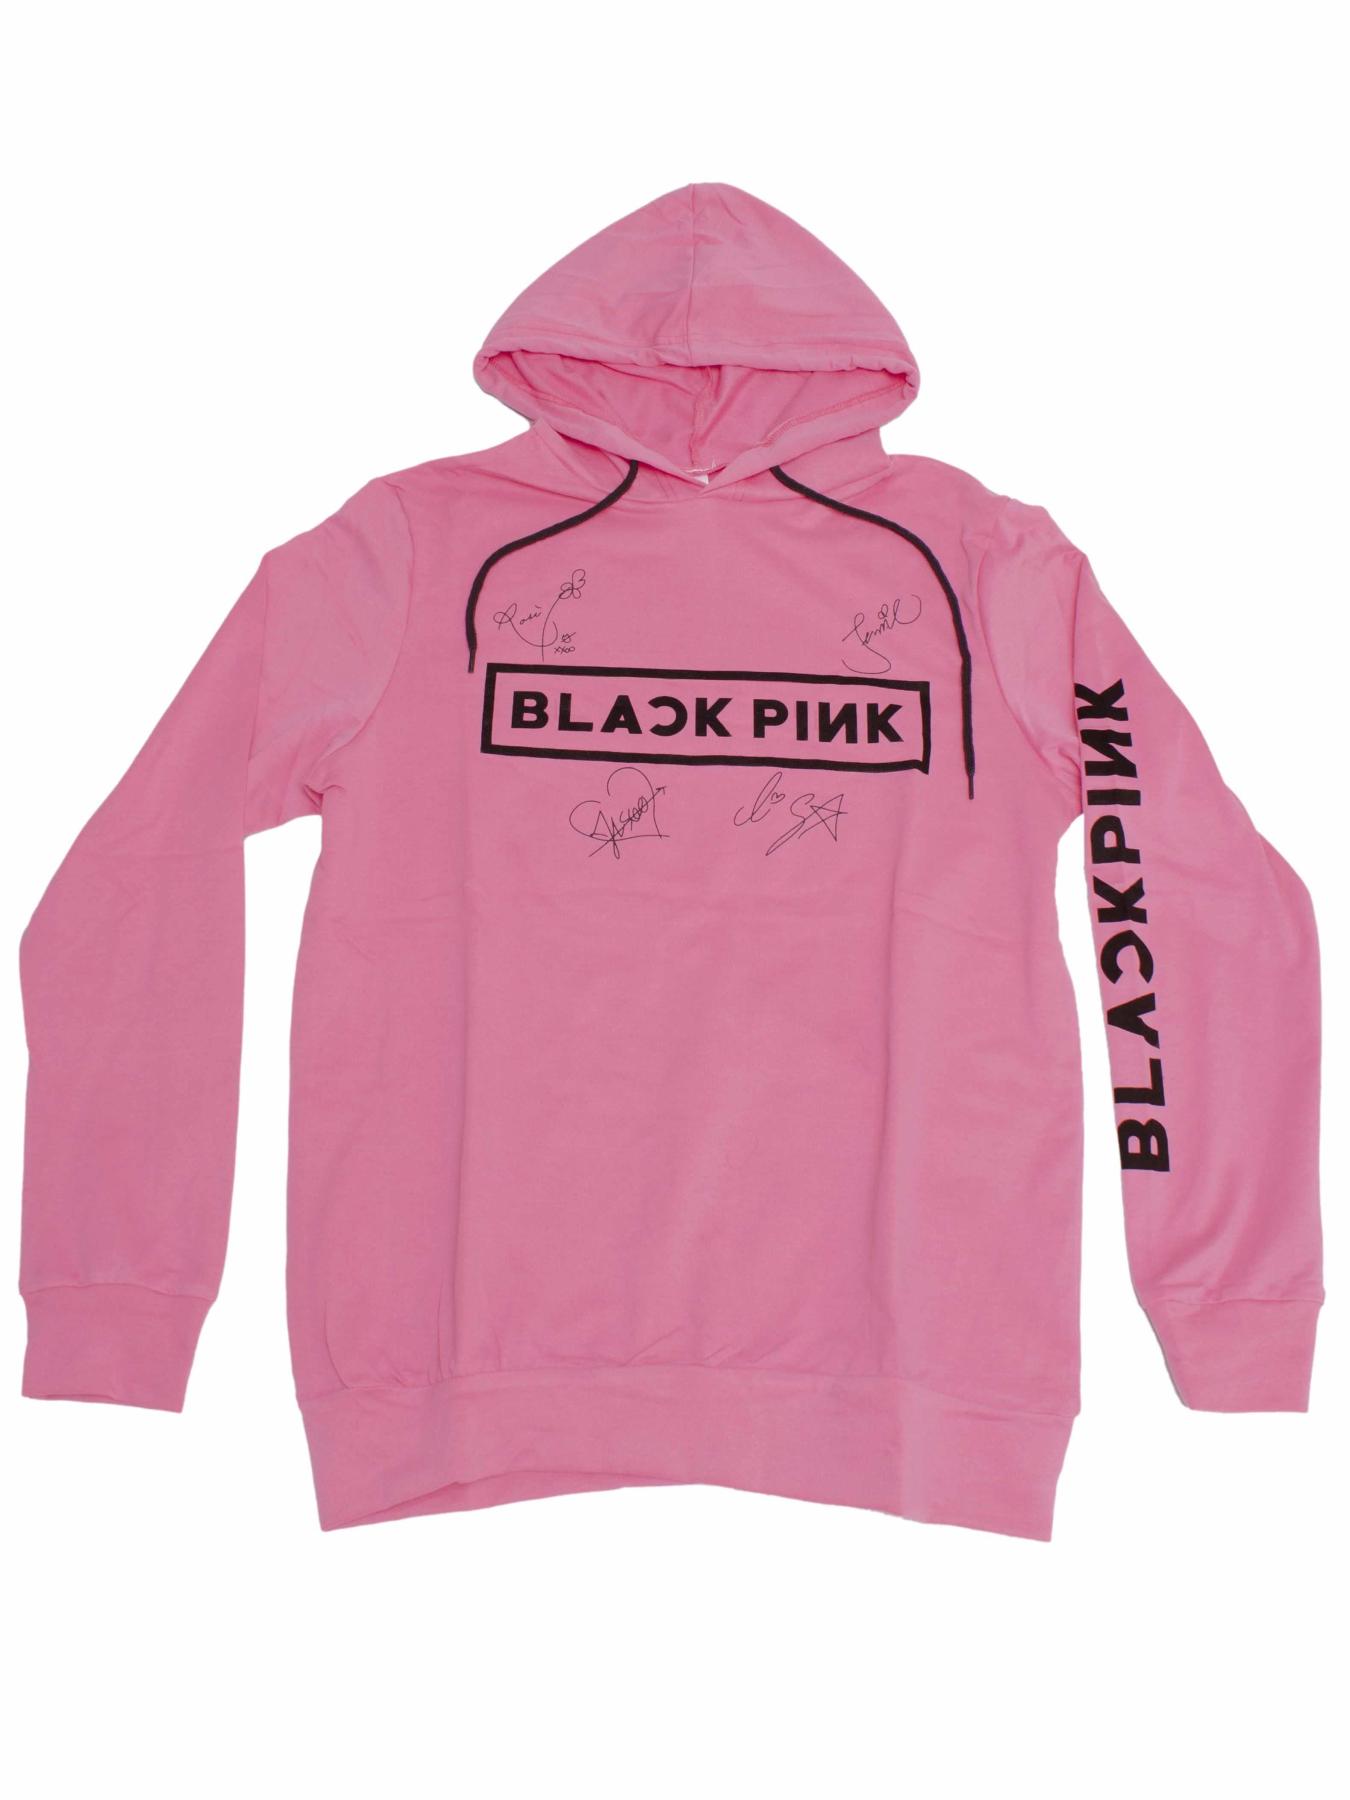 Blackpink Korean Music Group Signature Sweatshirt Hoodie KPS2007 Pink / L / Pack of 1 Official Korean Pop Merch